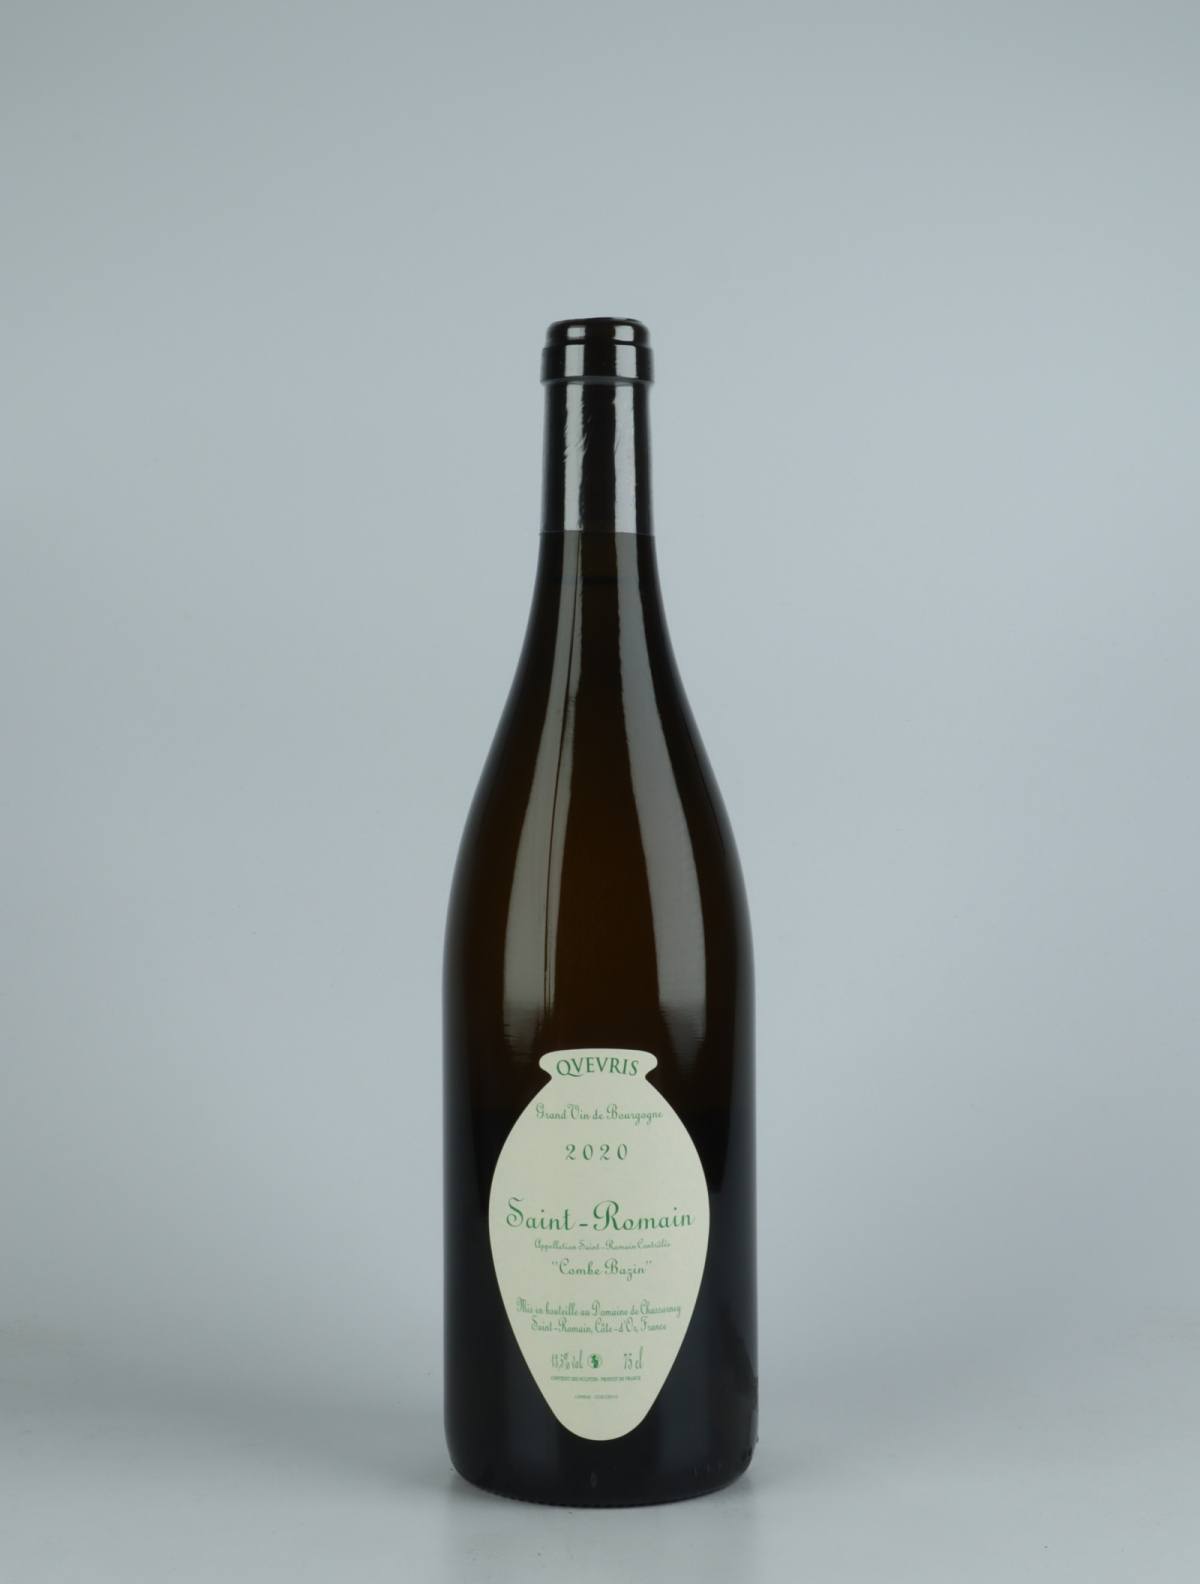 A bottle 2020 Saint Romain Blanc - Combe Bazin - Qvevris White wine from , Burgundy in France